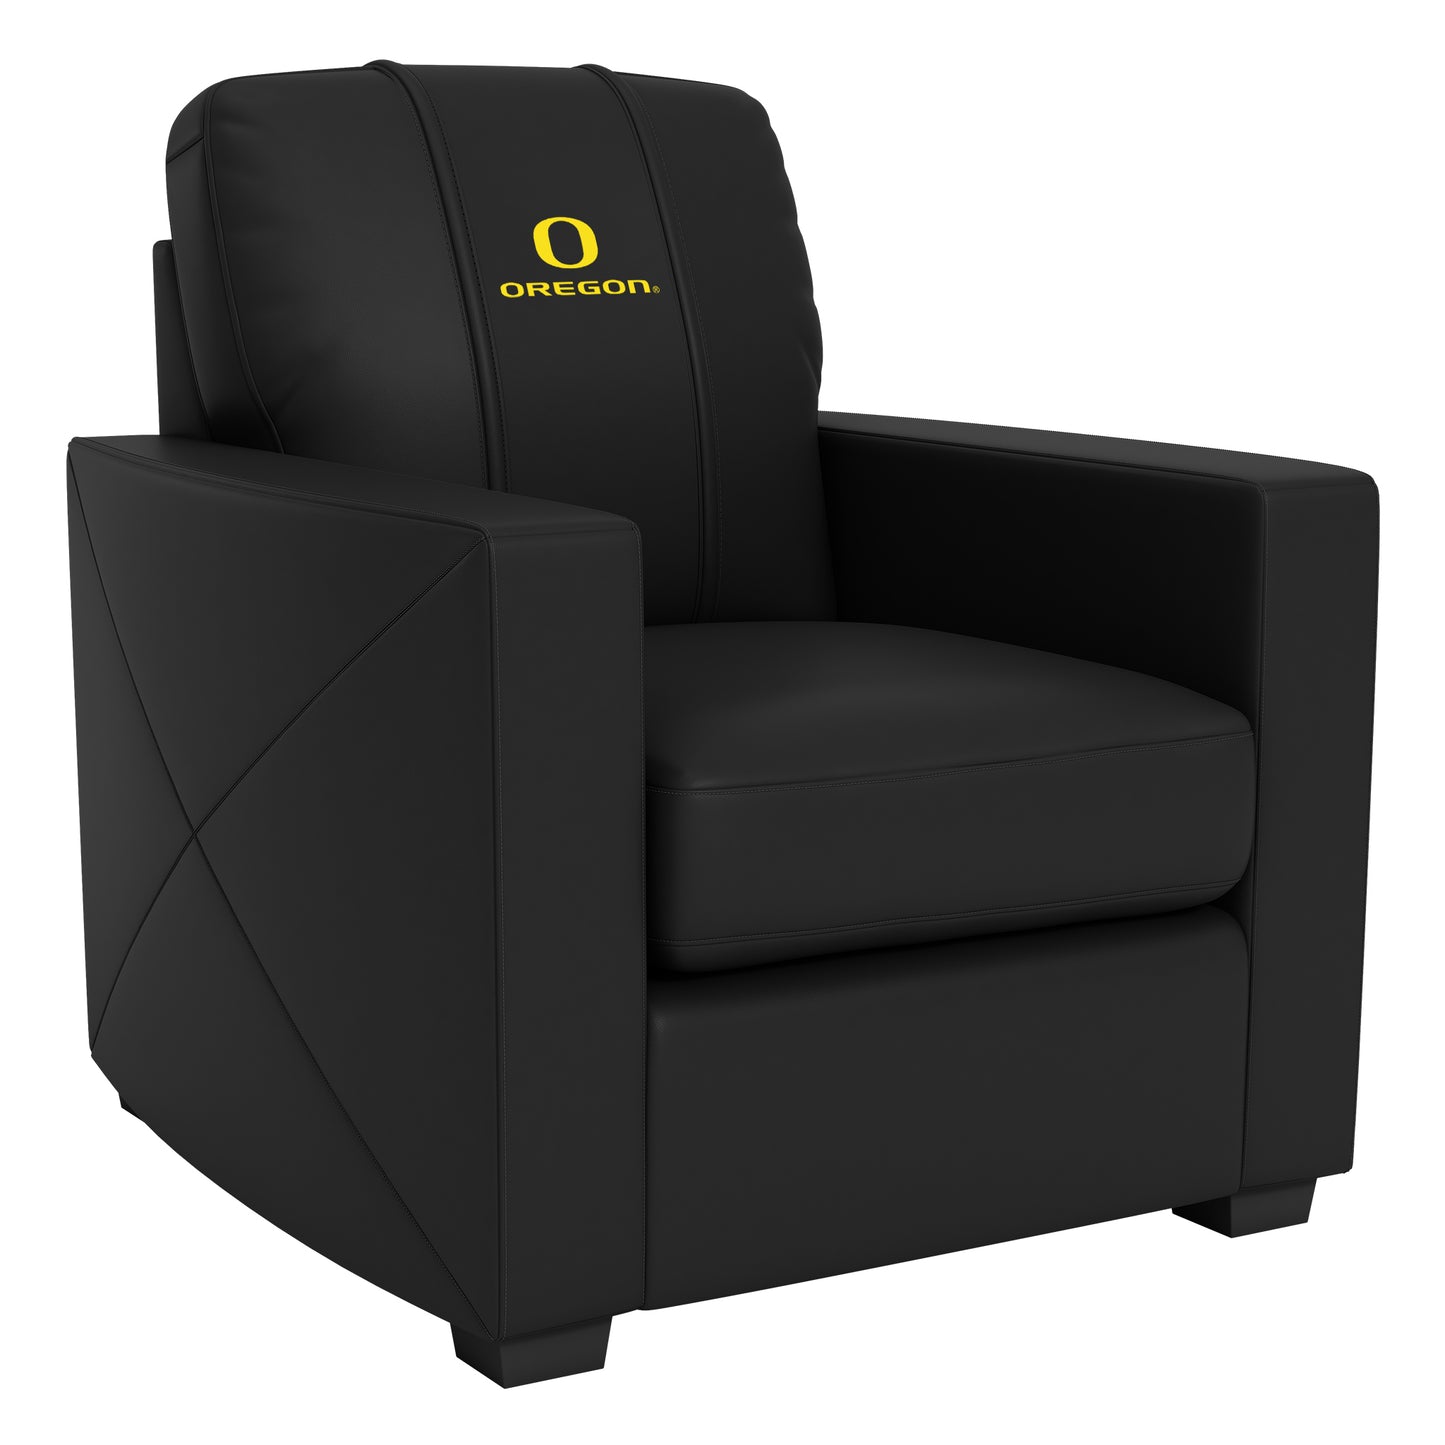 Silver Club Chair with Oregon Ducks Secondary Logo